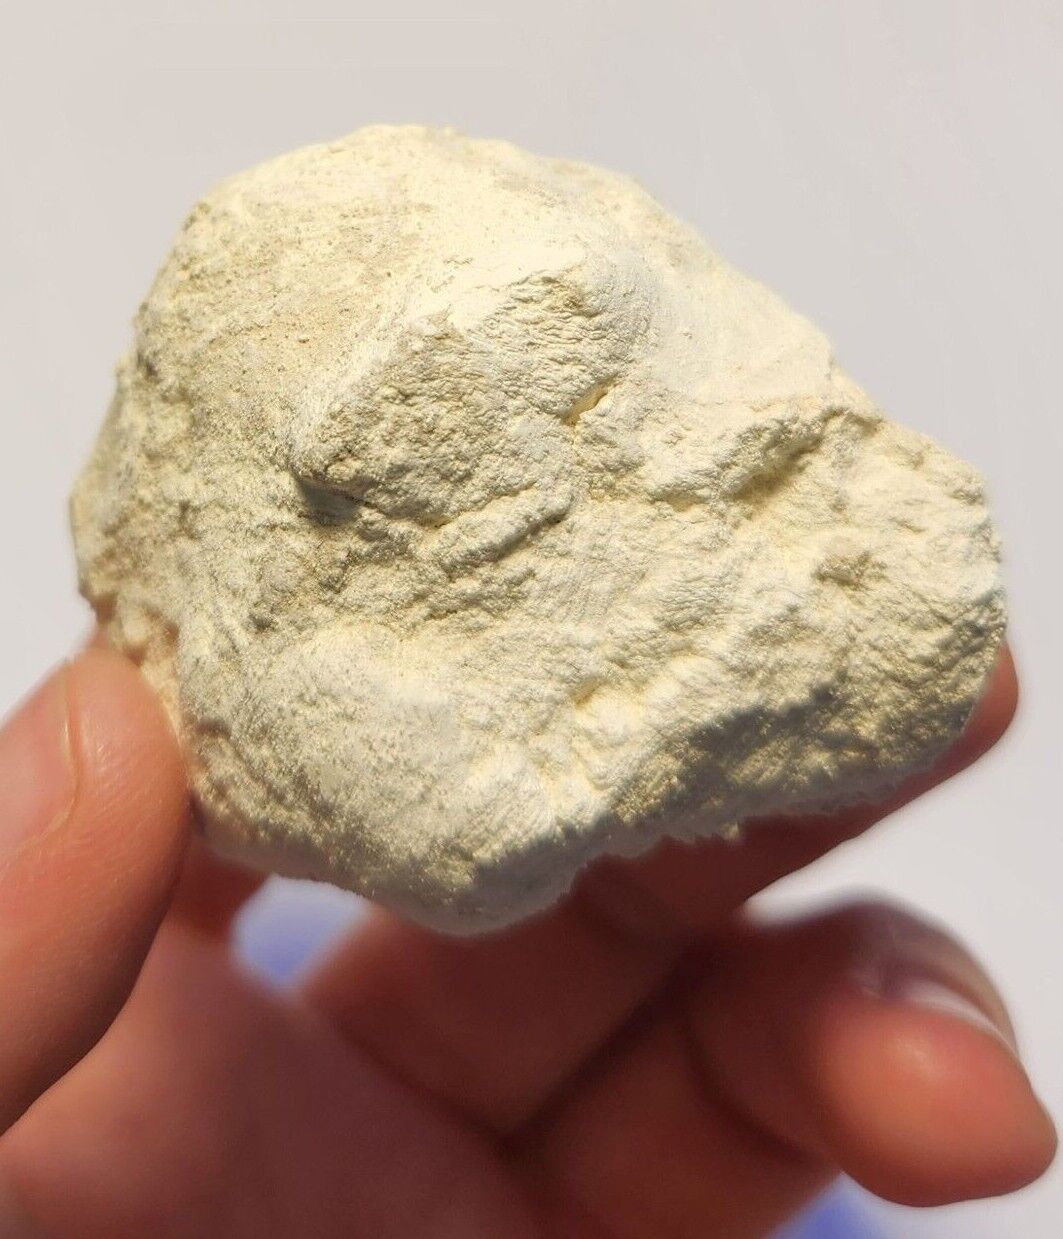 Authentic Brimstone Sulfur Balls • Biblical Sodom & Gomorrah • Large Size 1.5-2